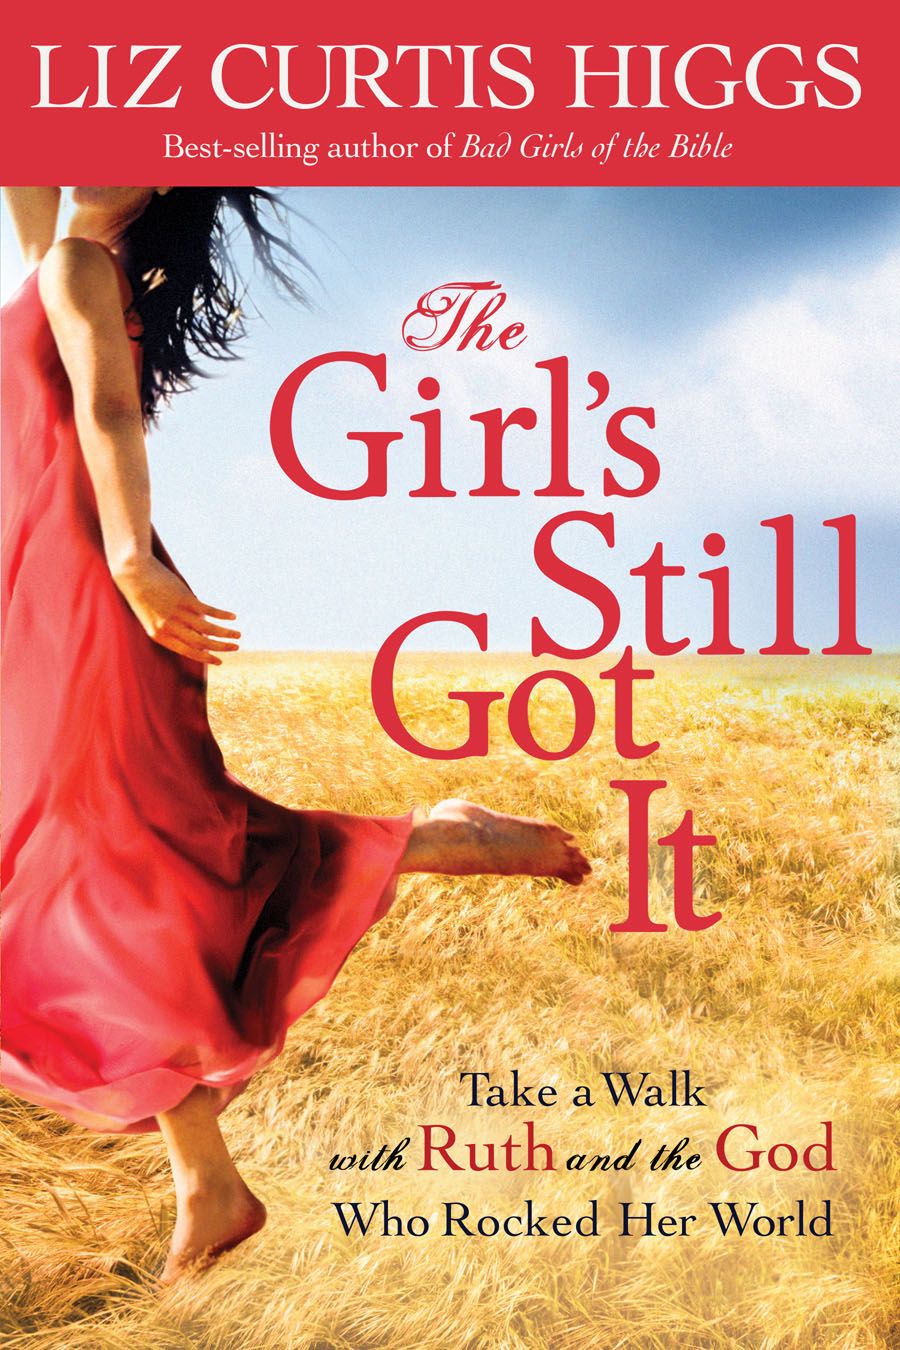 The Girl's Still Got It, by Liz Curtis Higgs